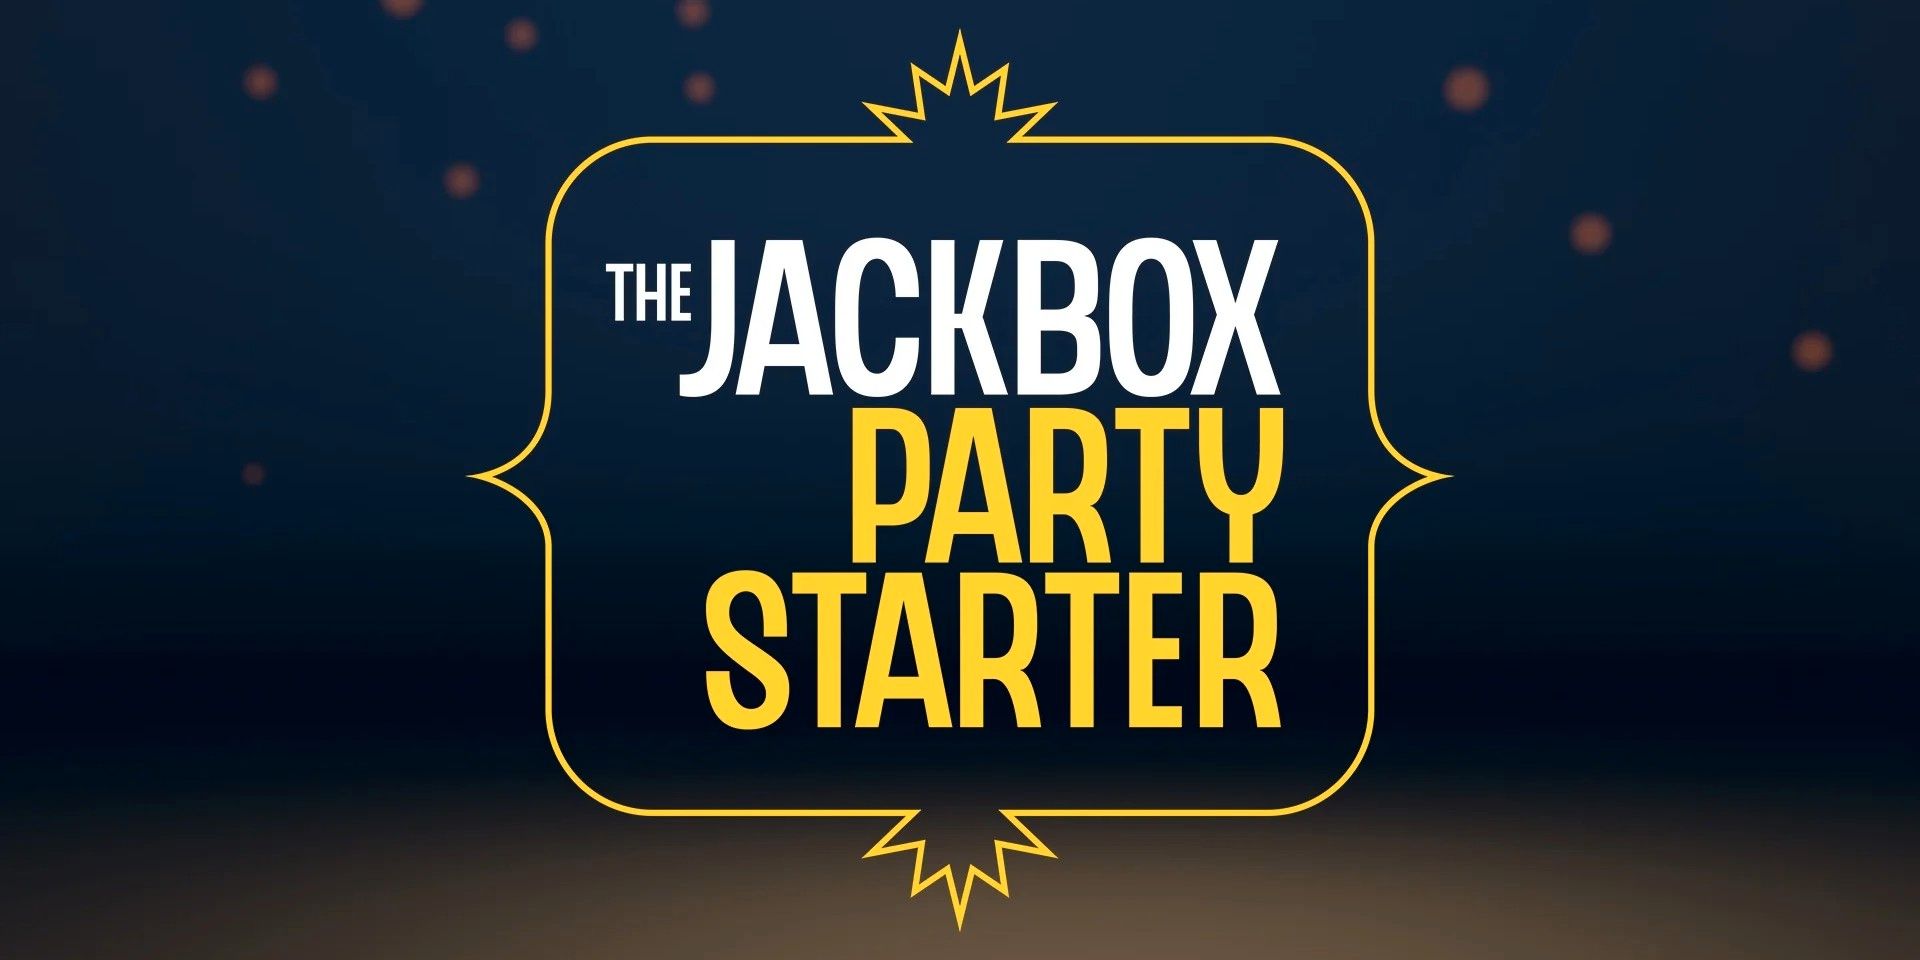 Avance de The Jackbox Party Starter: diversión renovada para todos